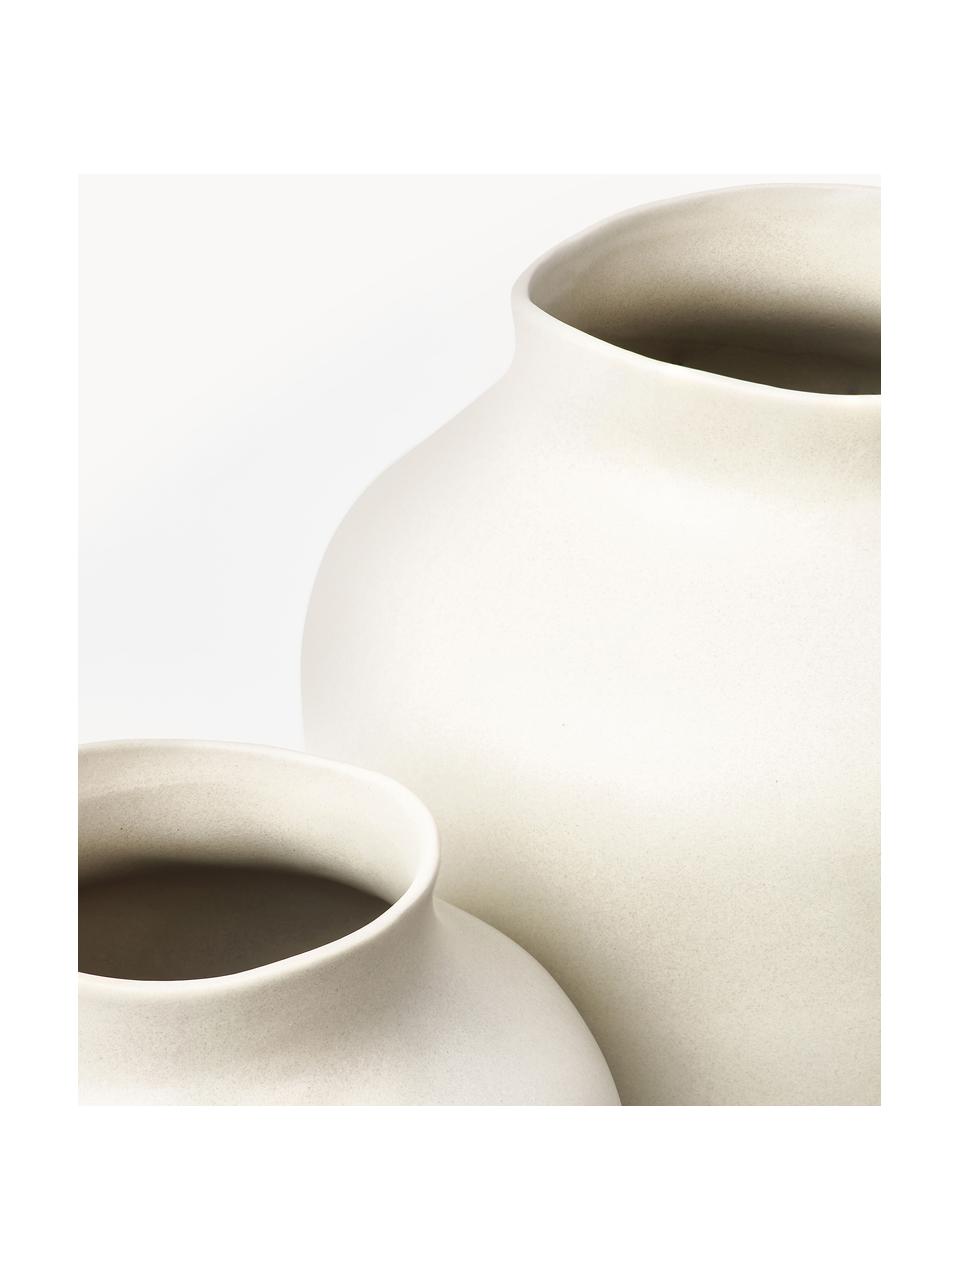 Vase artisanal Latona, tailles variées, Grès cérame, Blanc crème, Ø 21 x haut. 30 cm